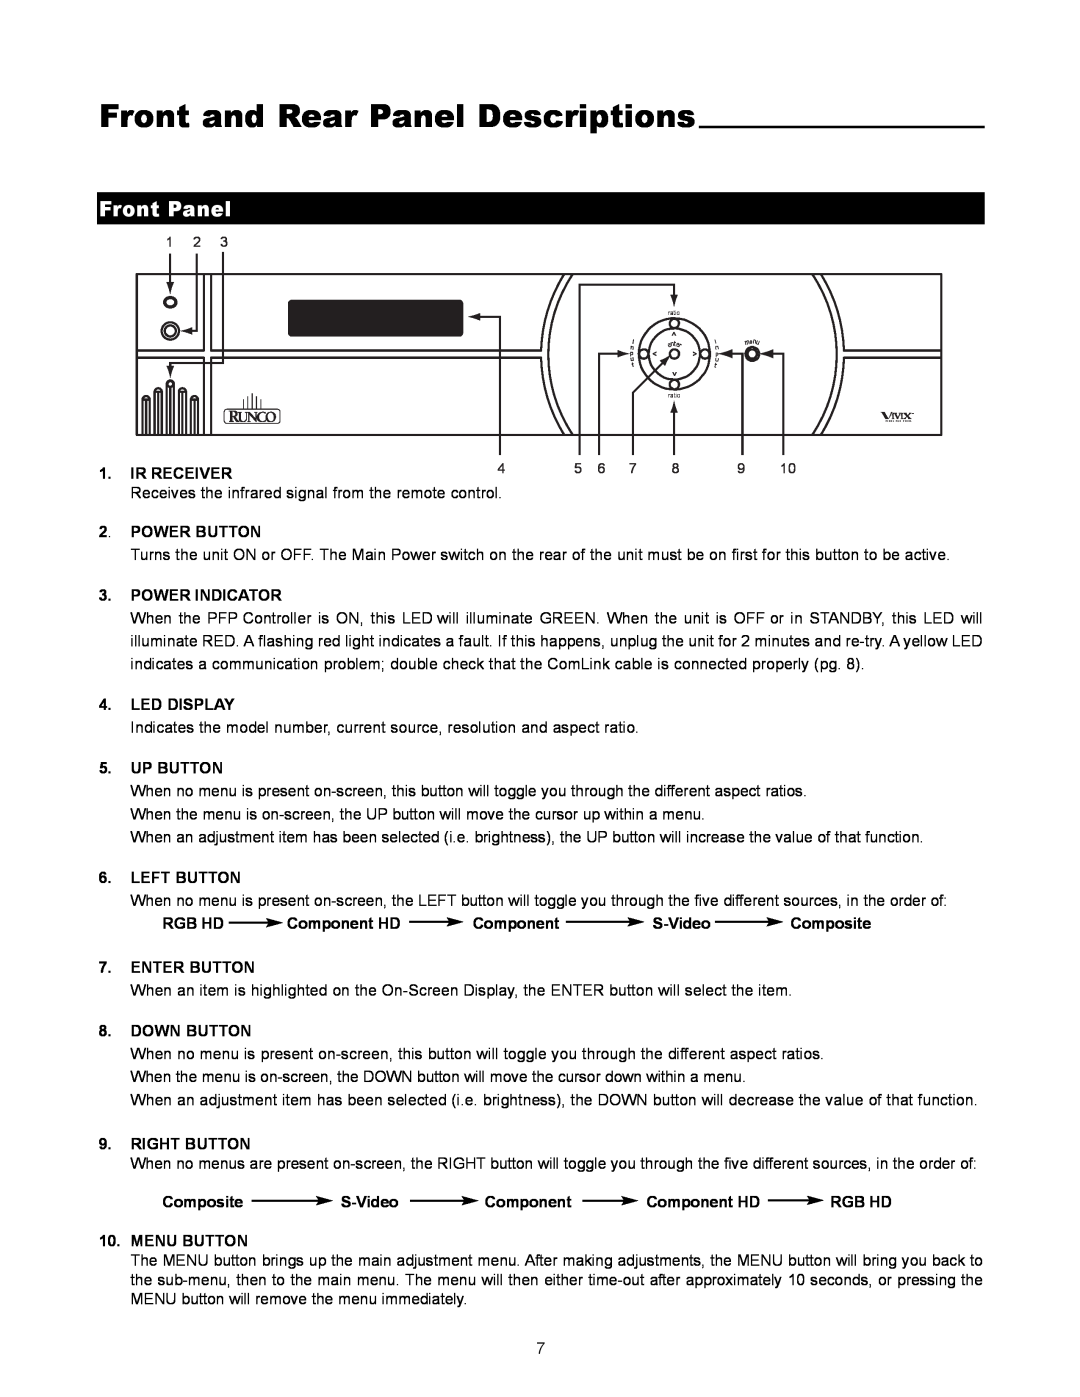 Runco DLC-2000HD user manual Front and Rear Panel Descriptions, Front Panel, Ir Receiver 